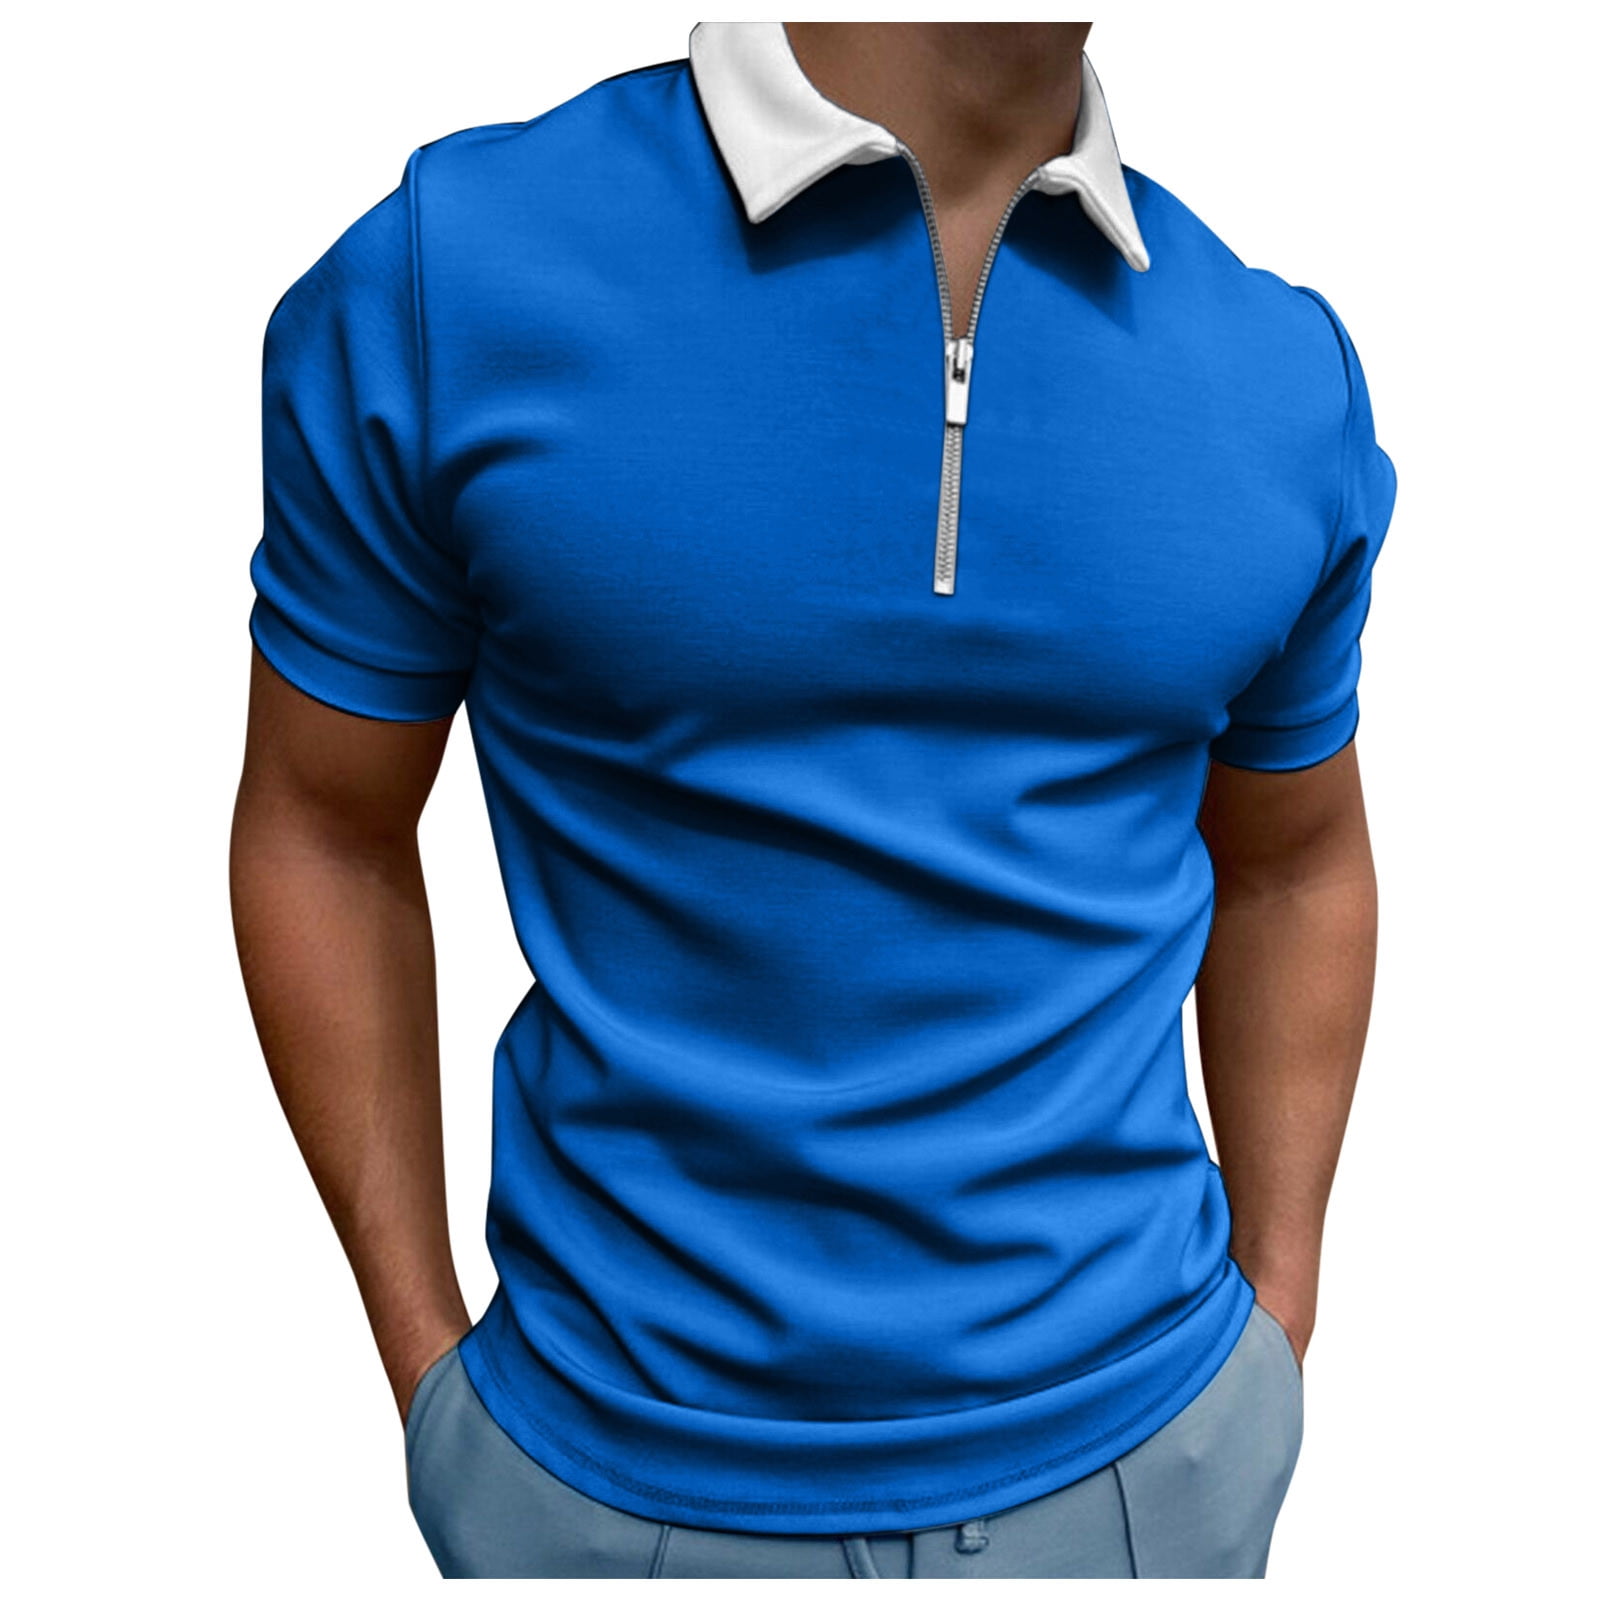 Royal Blue Shirt Style Collar Mens Denim Jacket